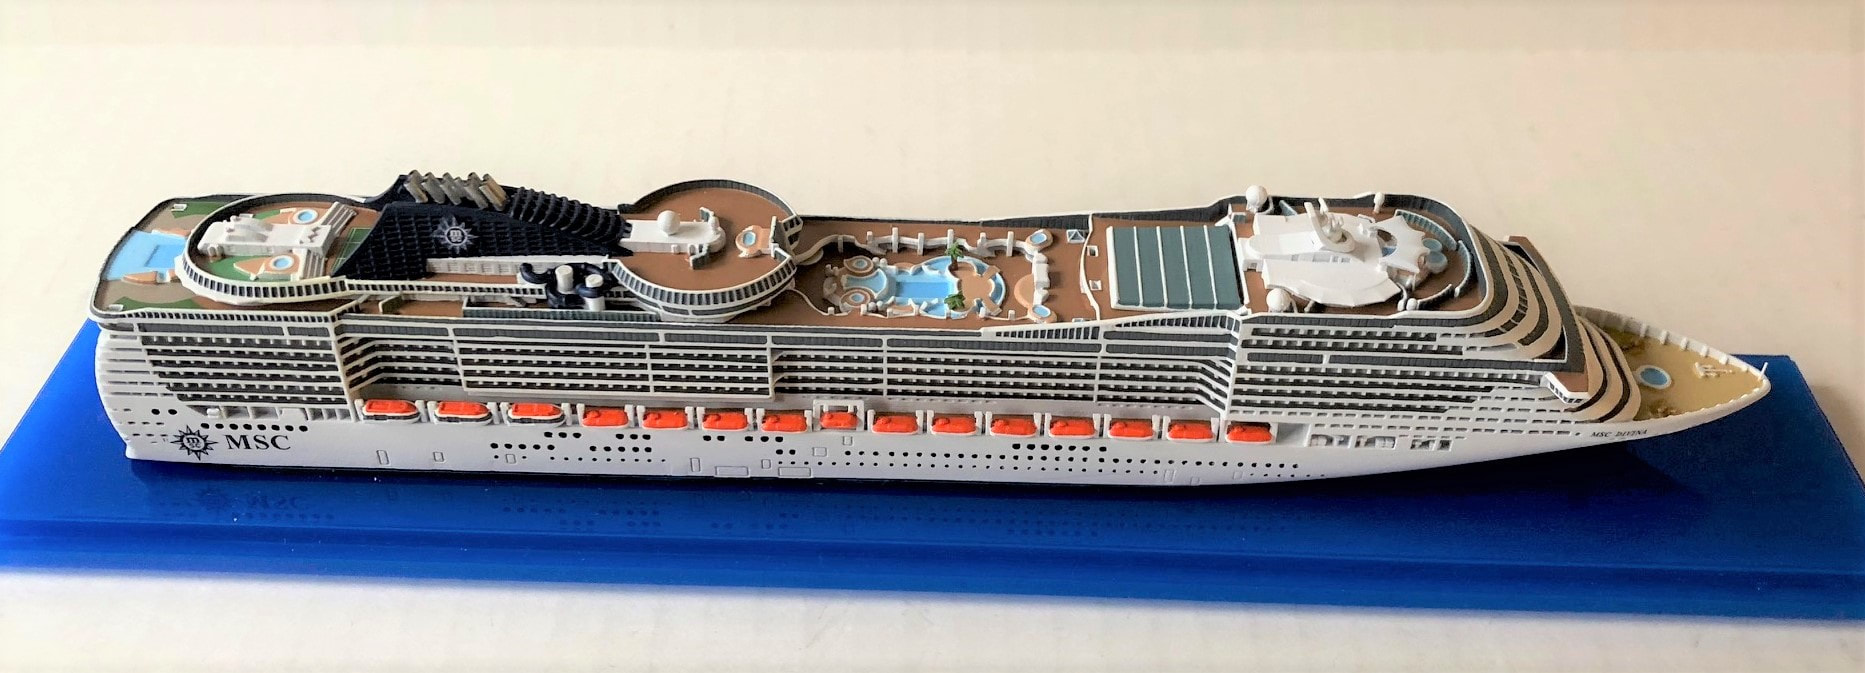 MSC Divina cruise ship model picture